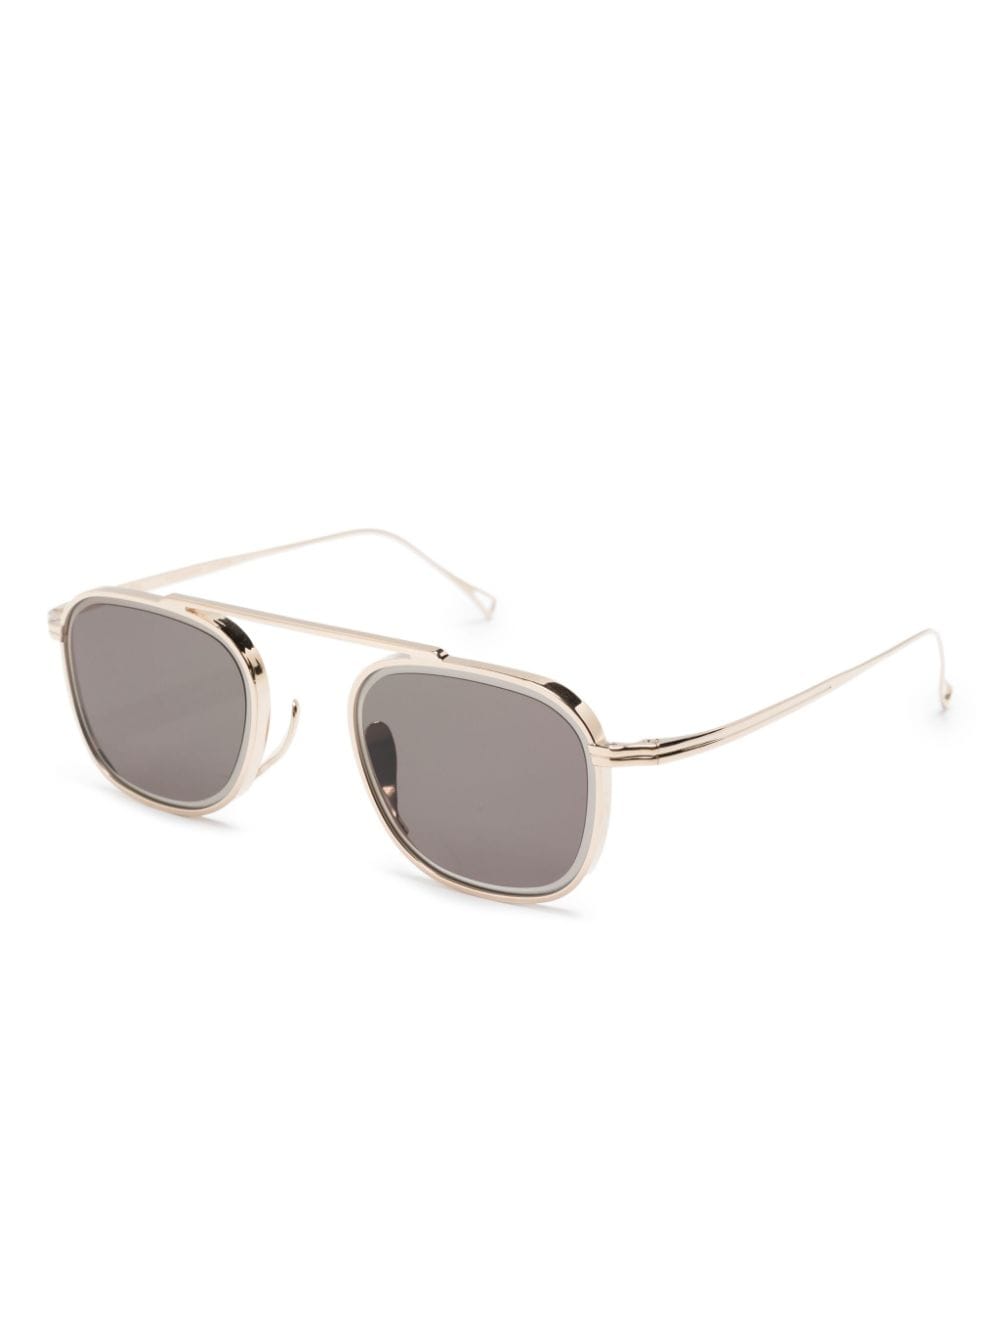 Kame Mannen 9501 zonnebril met vierkant montuur - Goud